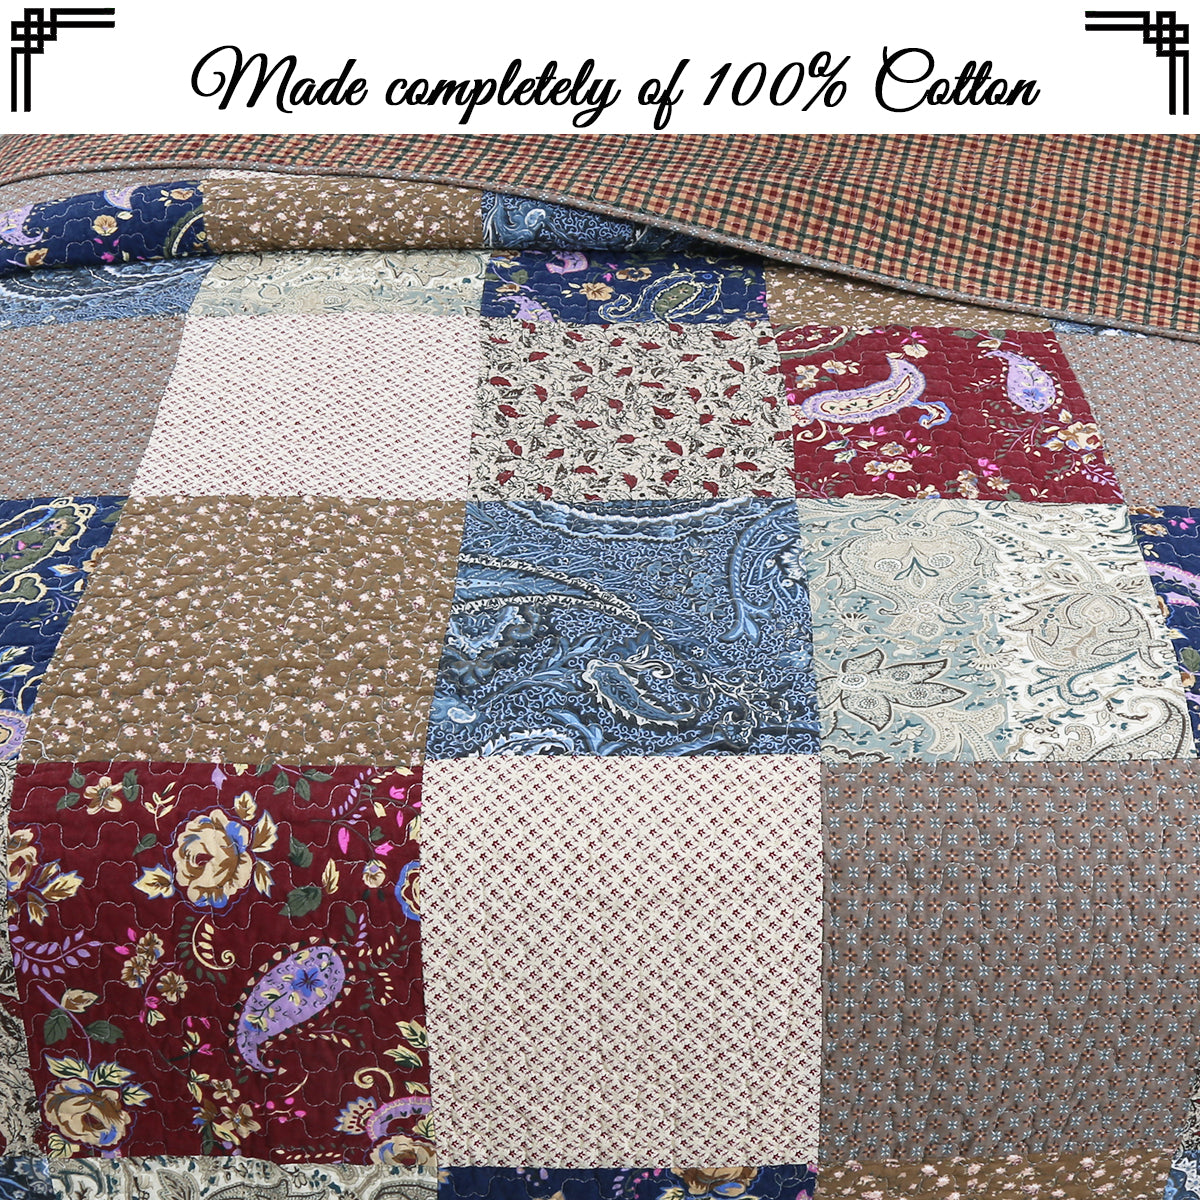 Hyler Sanders Floral Paisley Real Patchwork 3-Piece Cotton Reversible Quilt Bedding Set